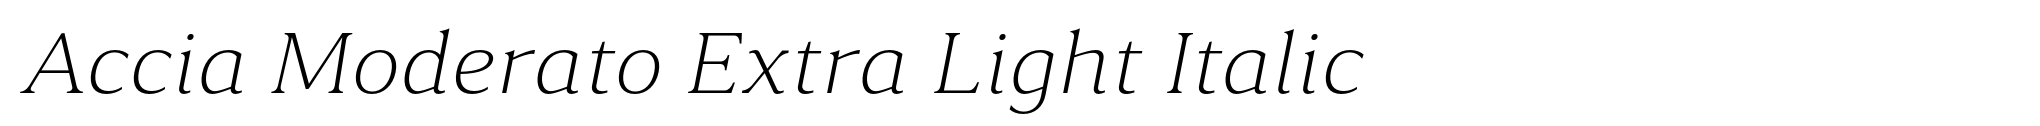 Accia Moderato Extra Light Italic image